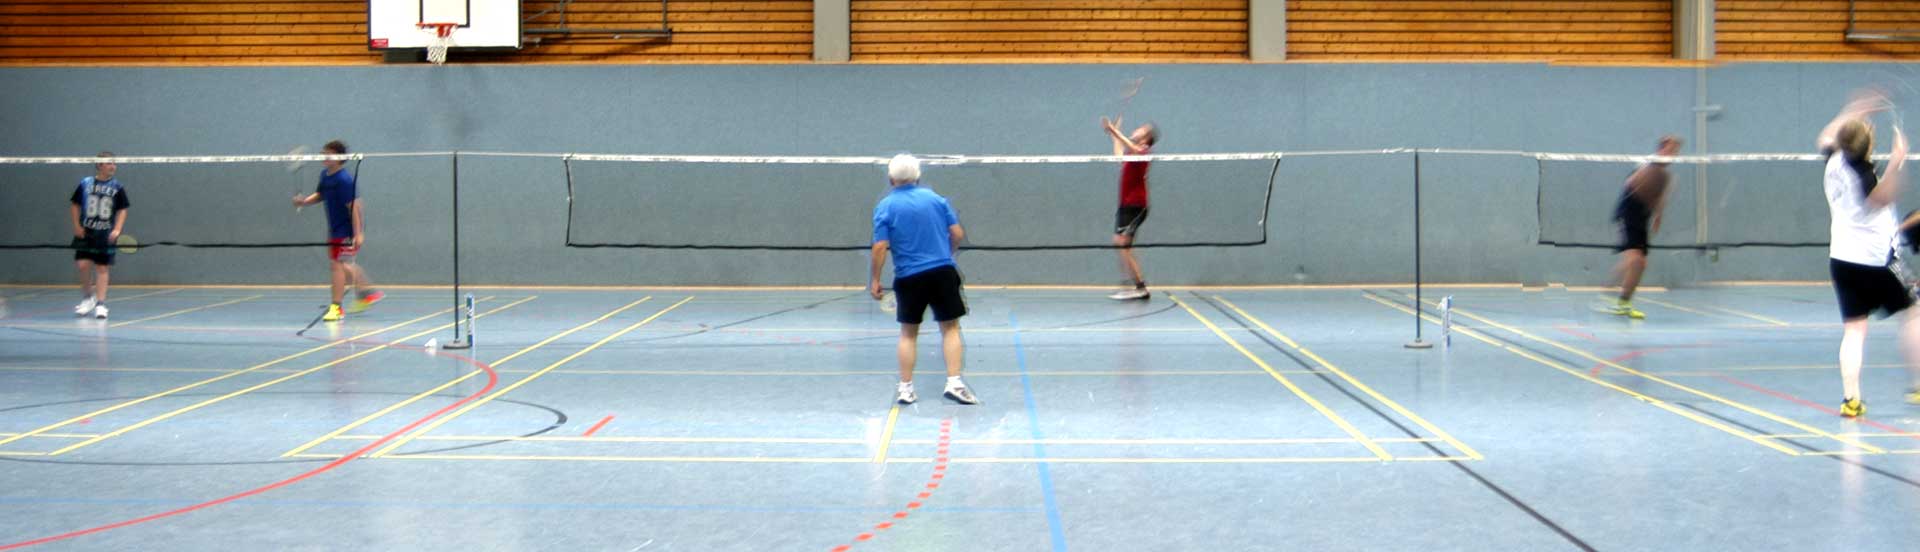 Badminton beim CfB Gütersloh